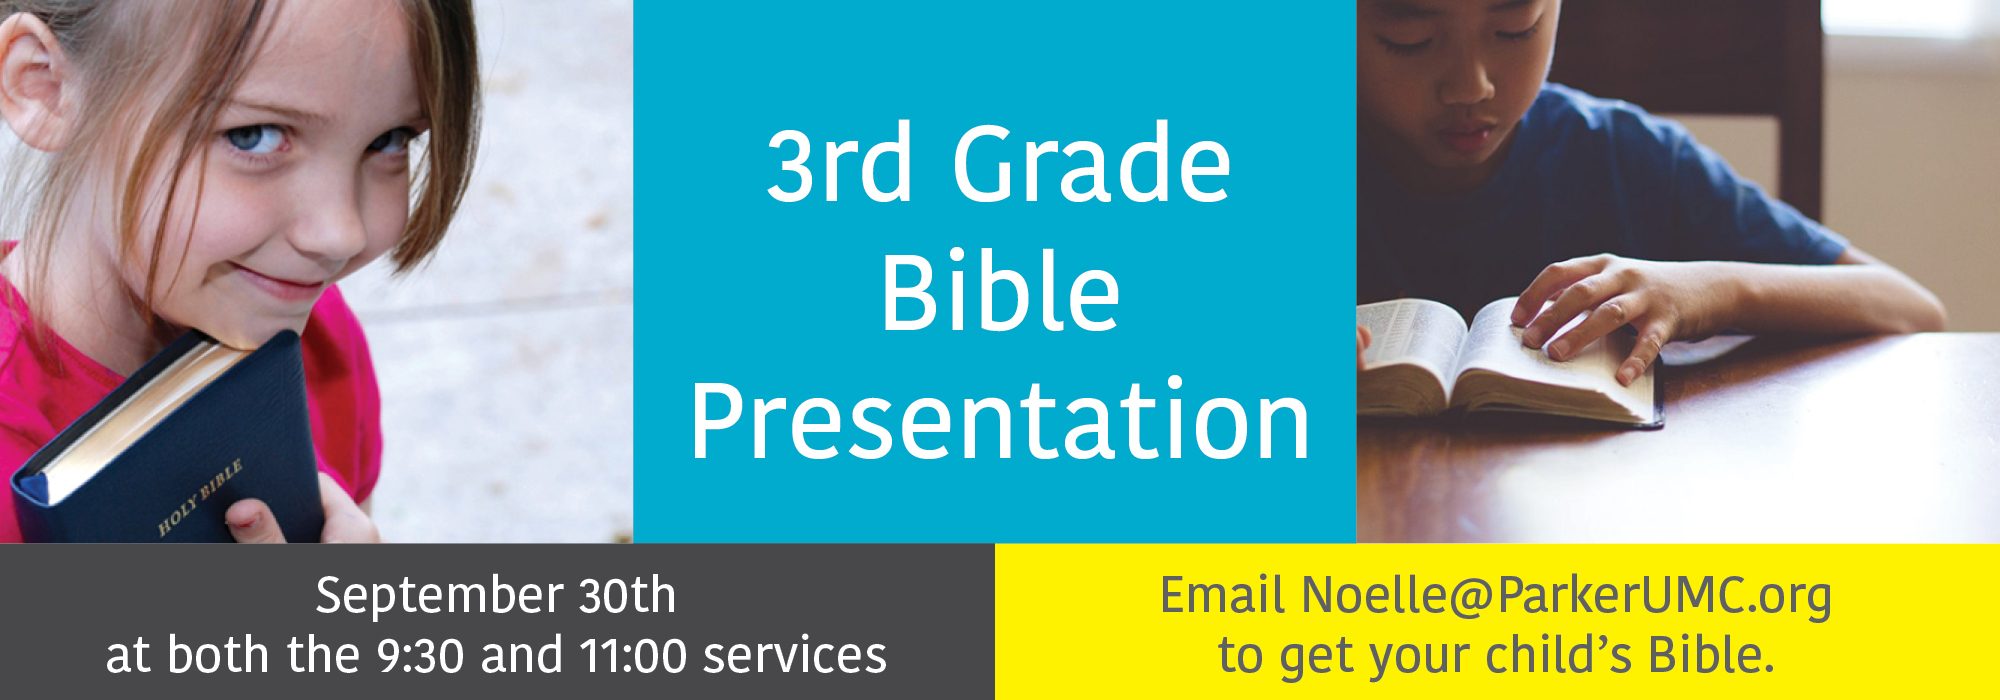 Third Grade Bible Presentation Info